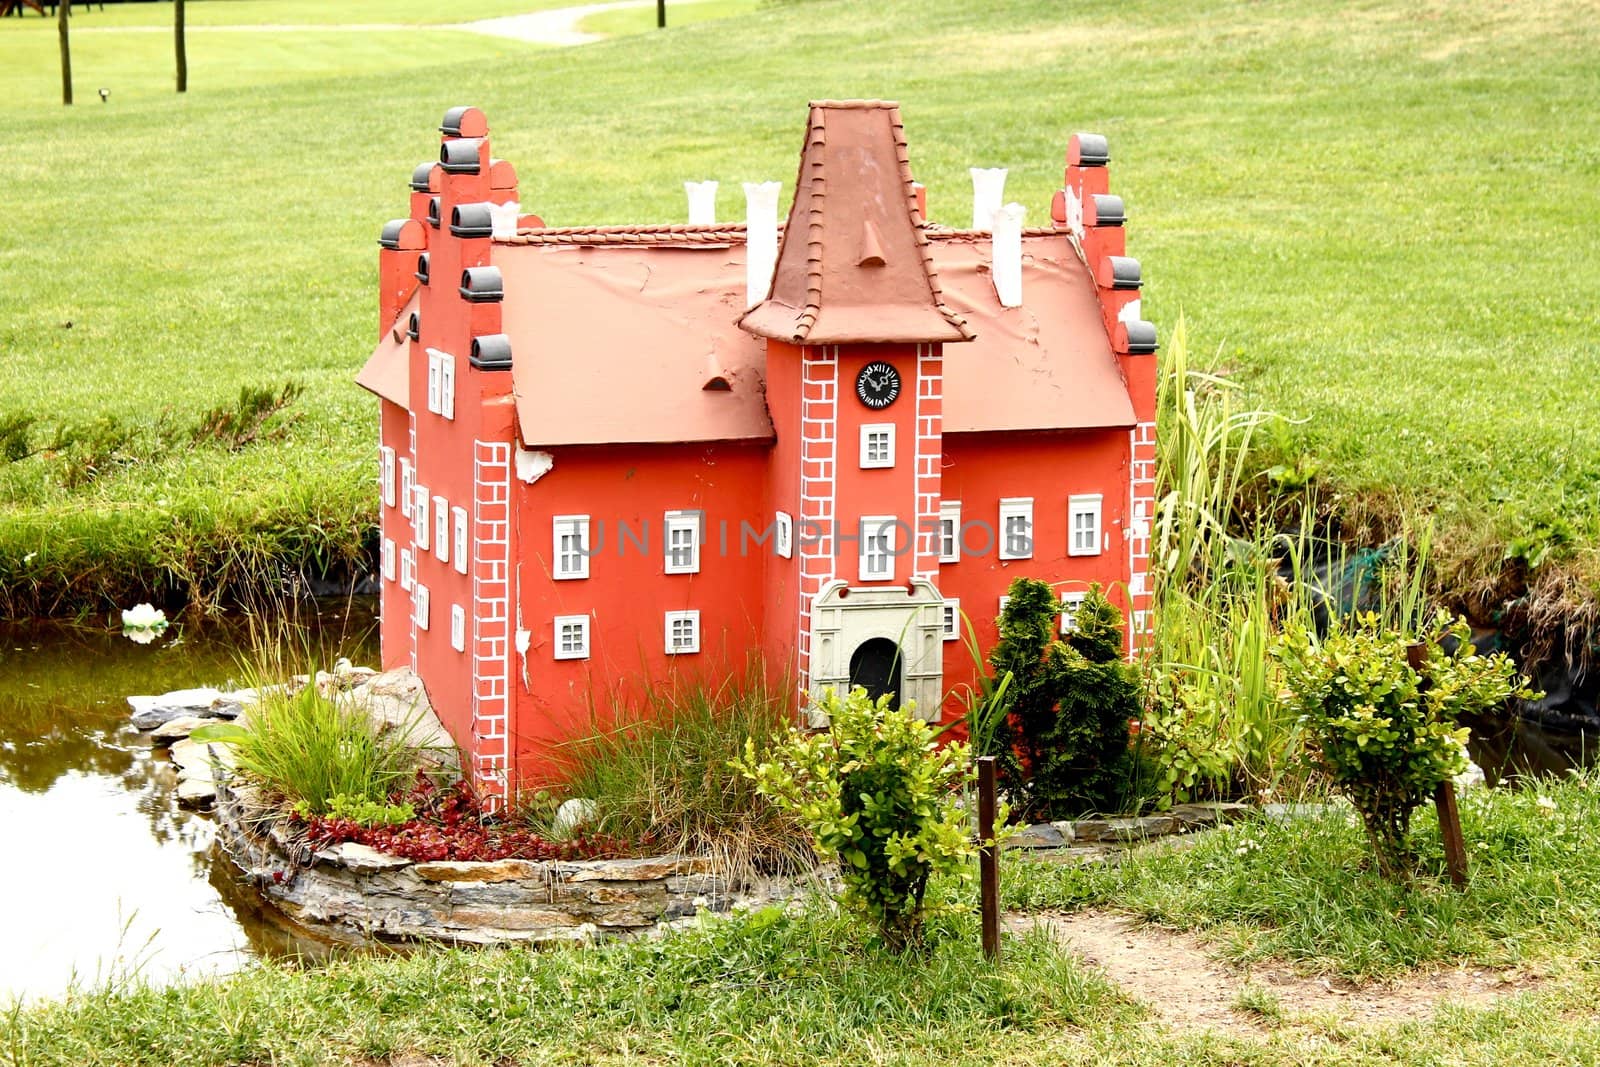 Model of the Cervena Lhota castle in the Berchtold park near Prague, Czech Republic